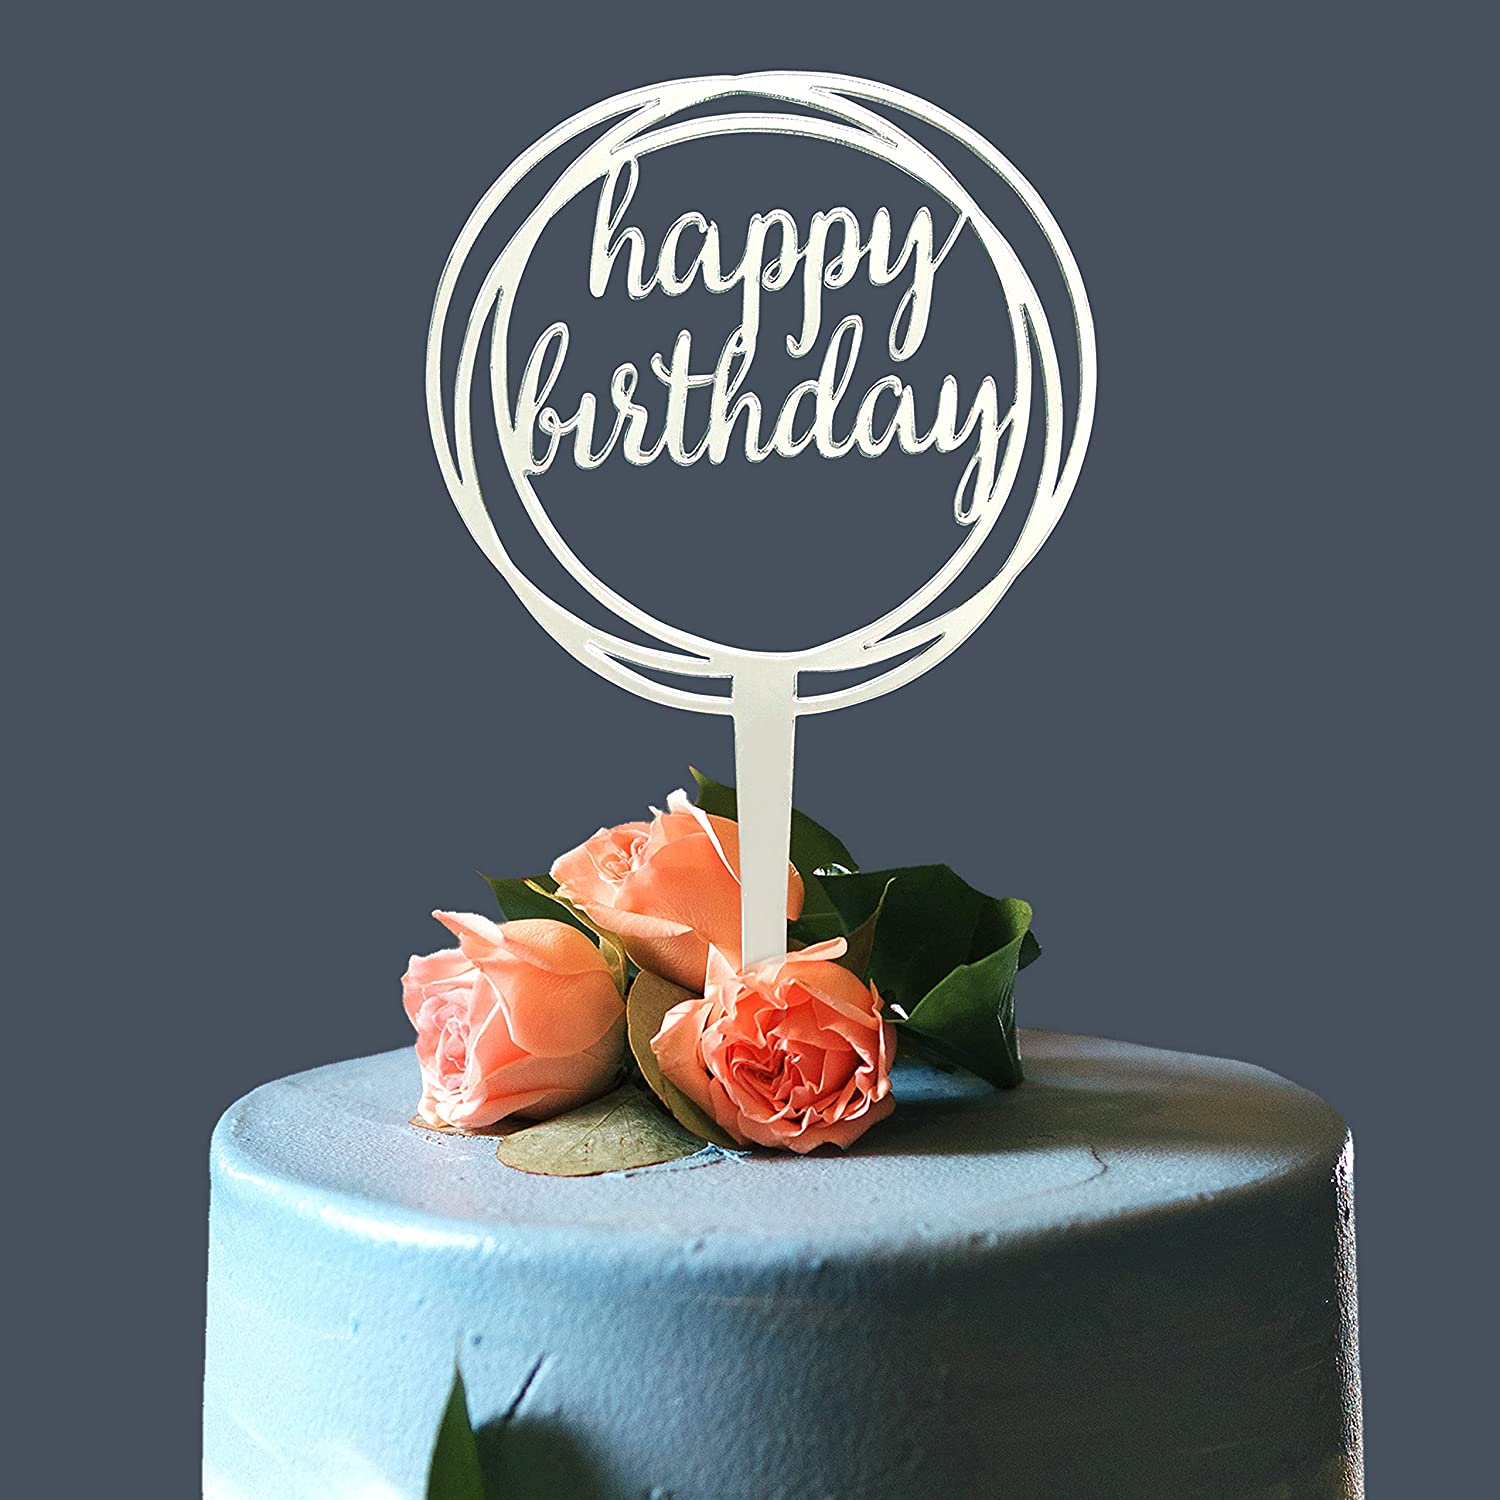 custom cake toppers and birthday cake_ LA Bakery Café & Eatery